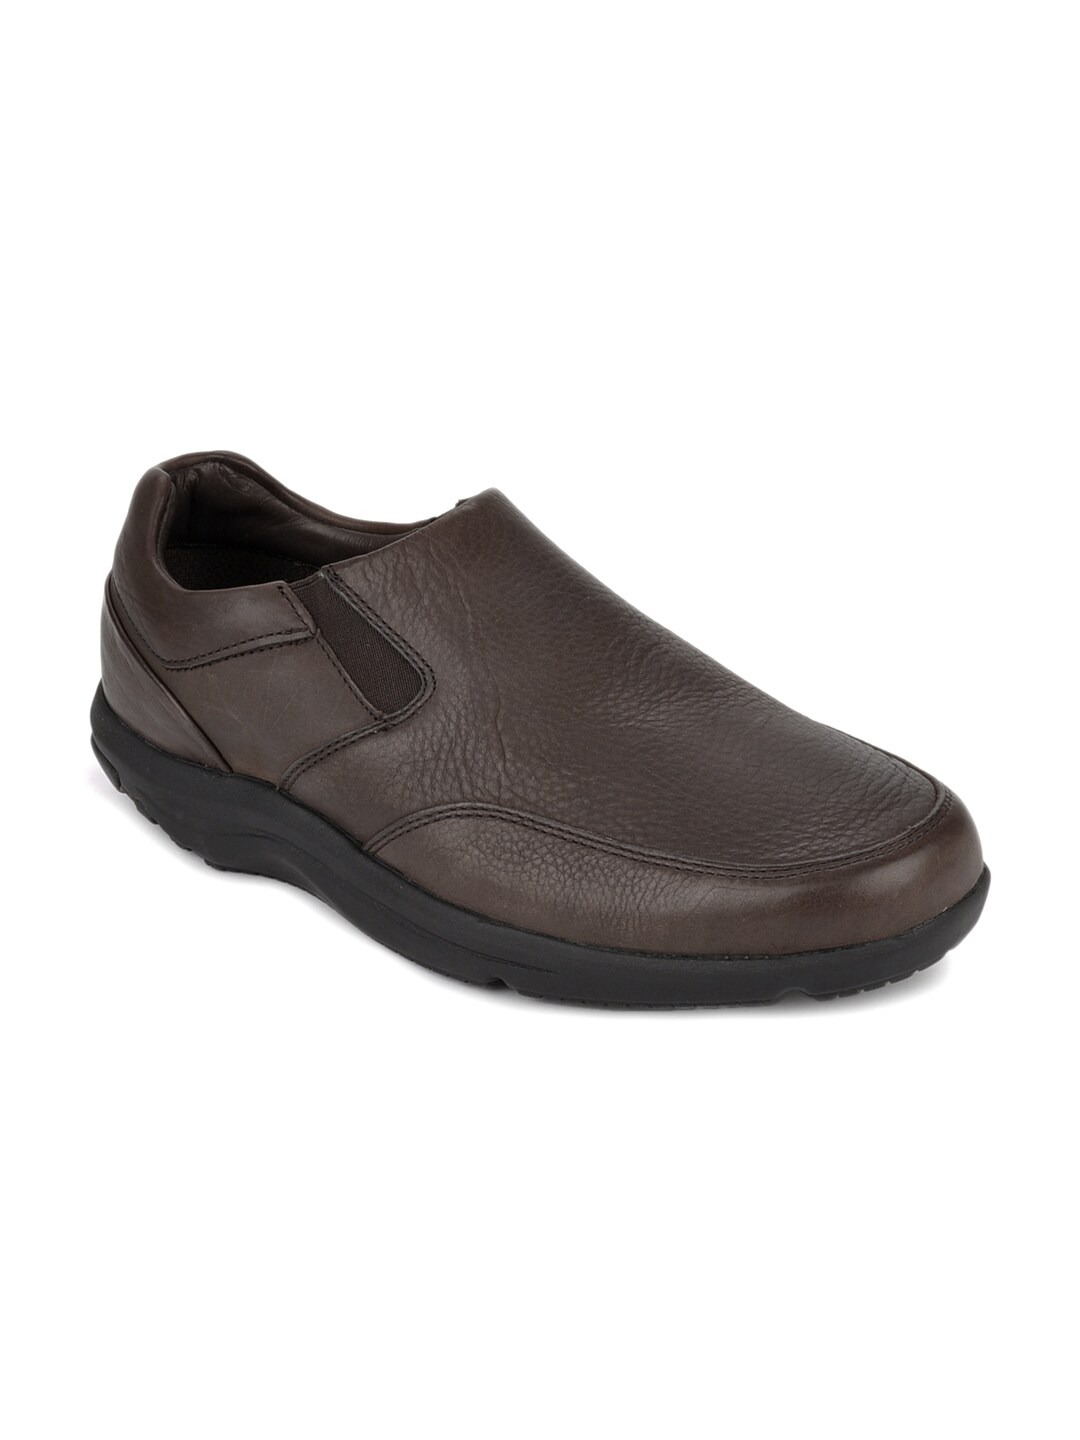 Rockport Men Brown Leather Semi-Formal Shoes